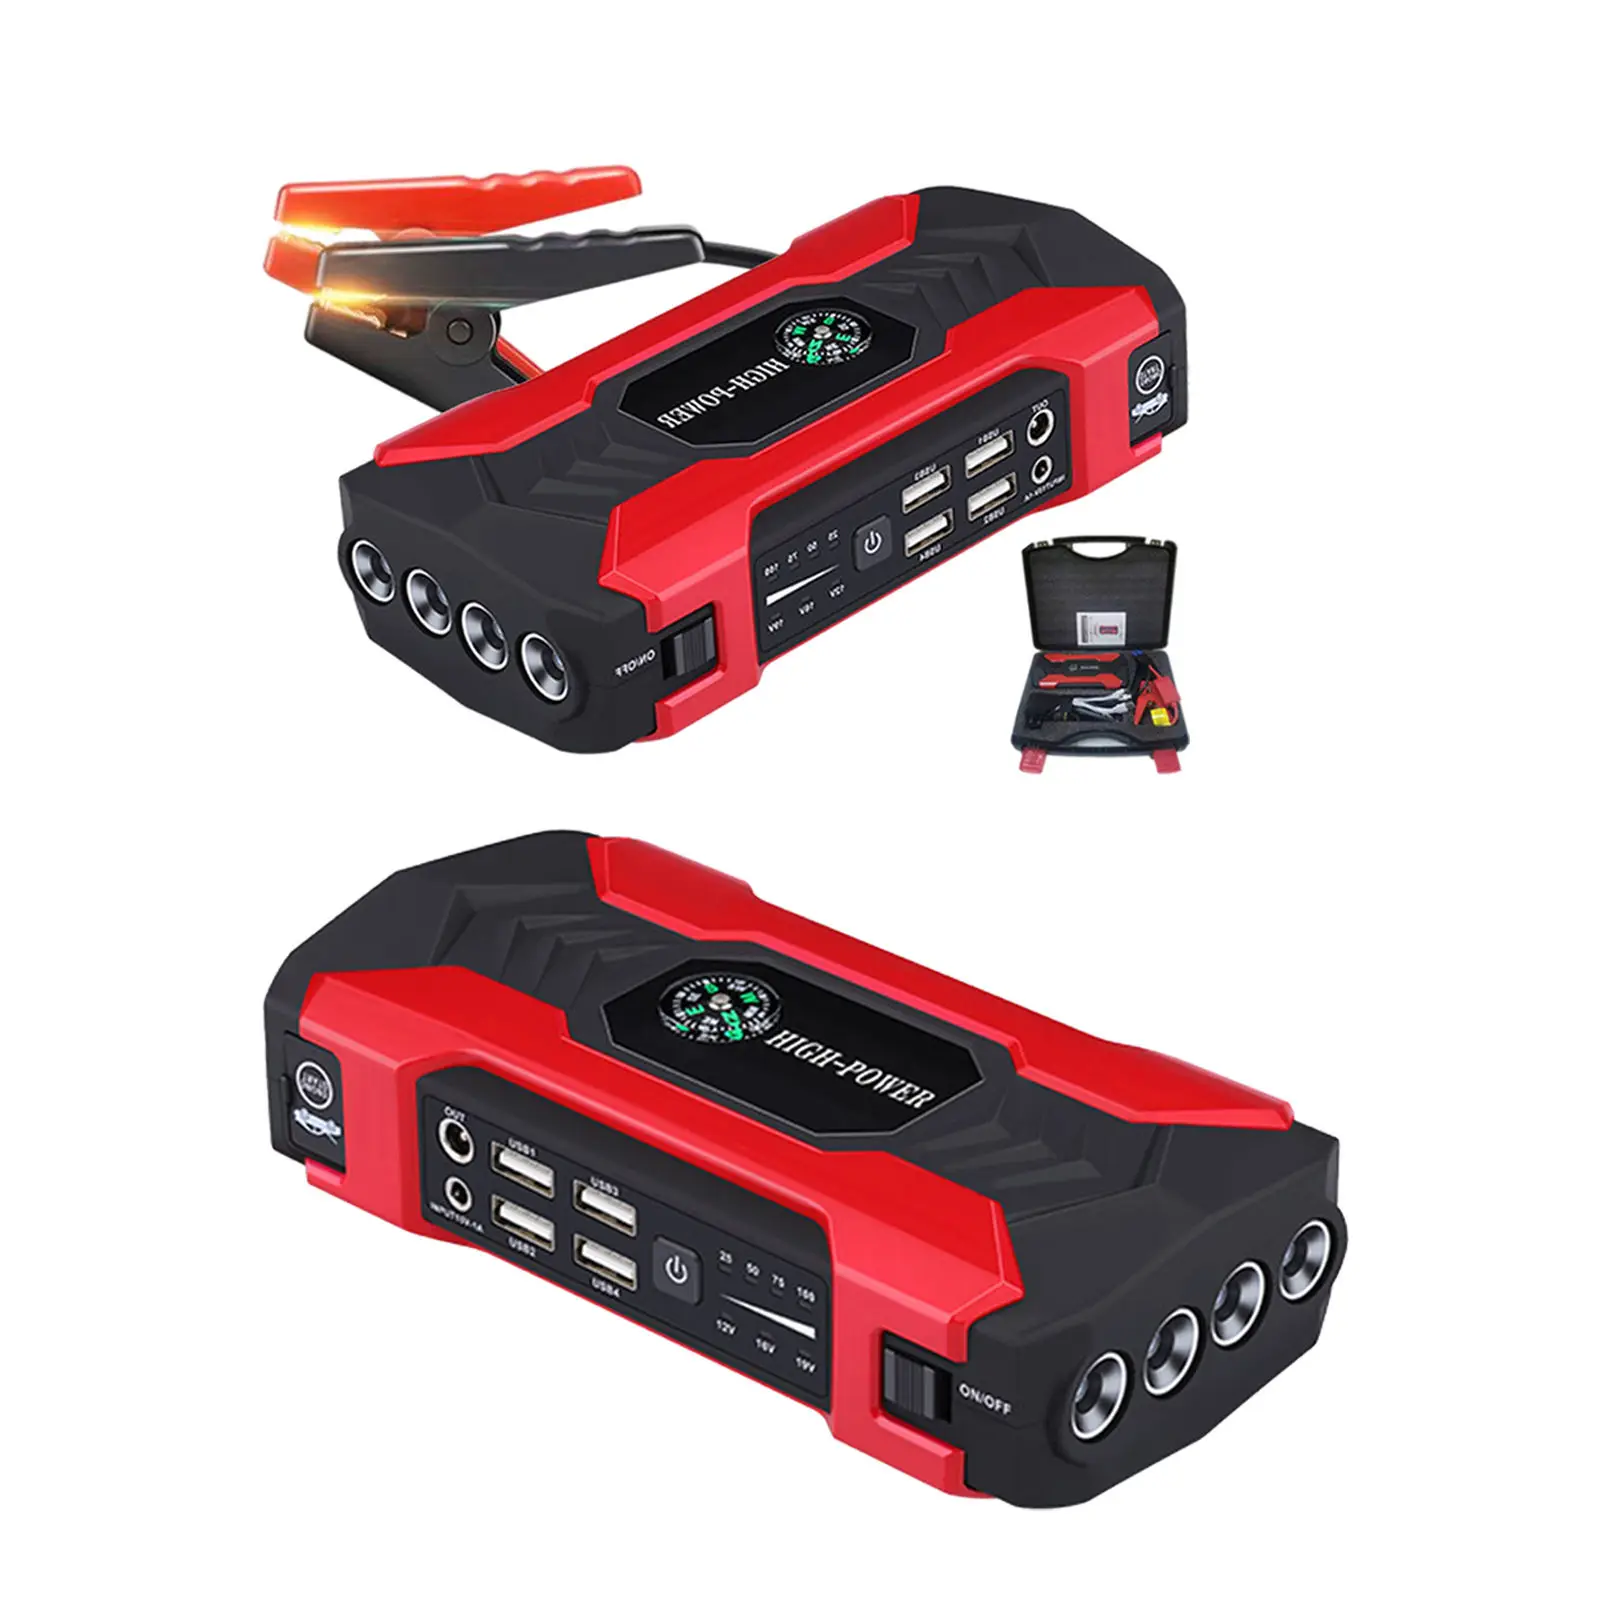 

12V Car Jump Starter Portable Peak 400A 10000mah Charger Power Bank 4 USB Port Battery Booster LED Flashlight